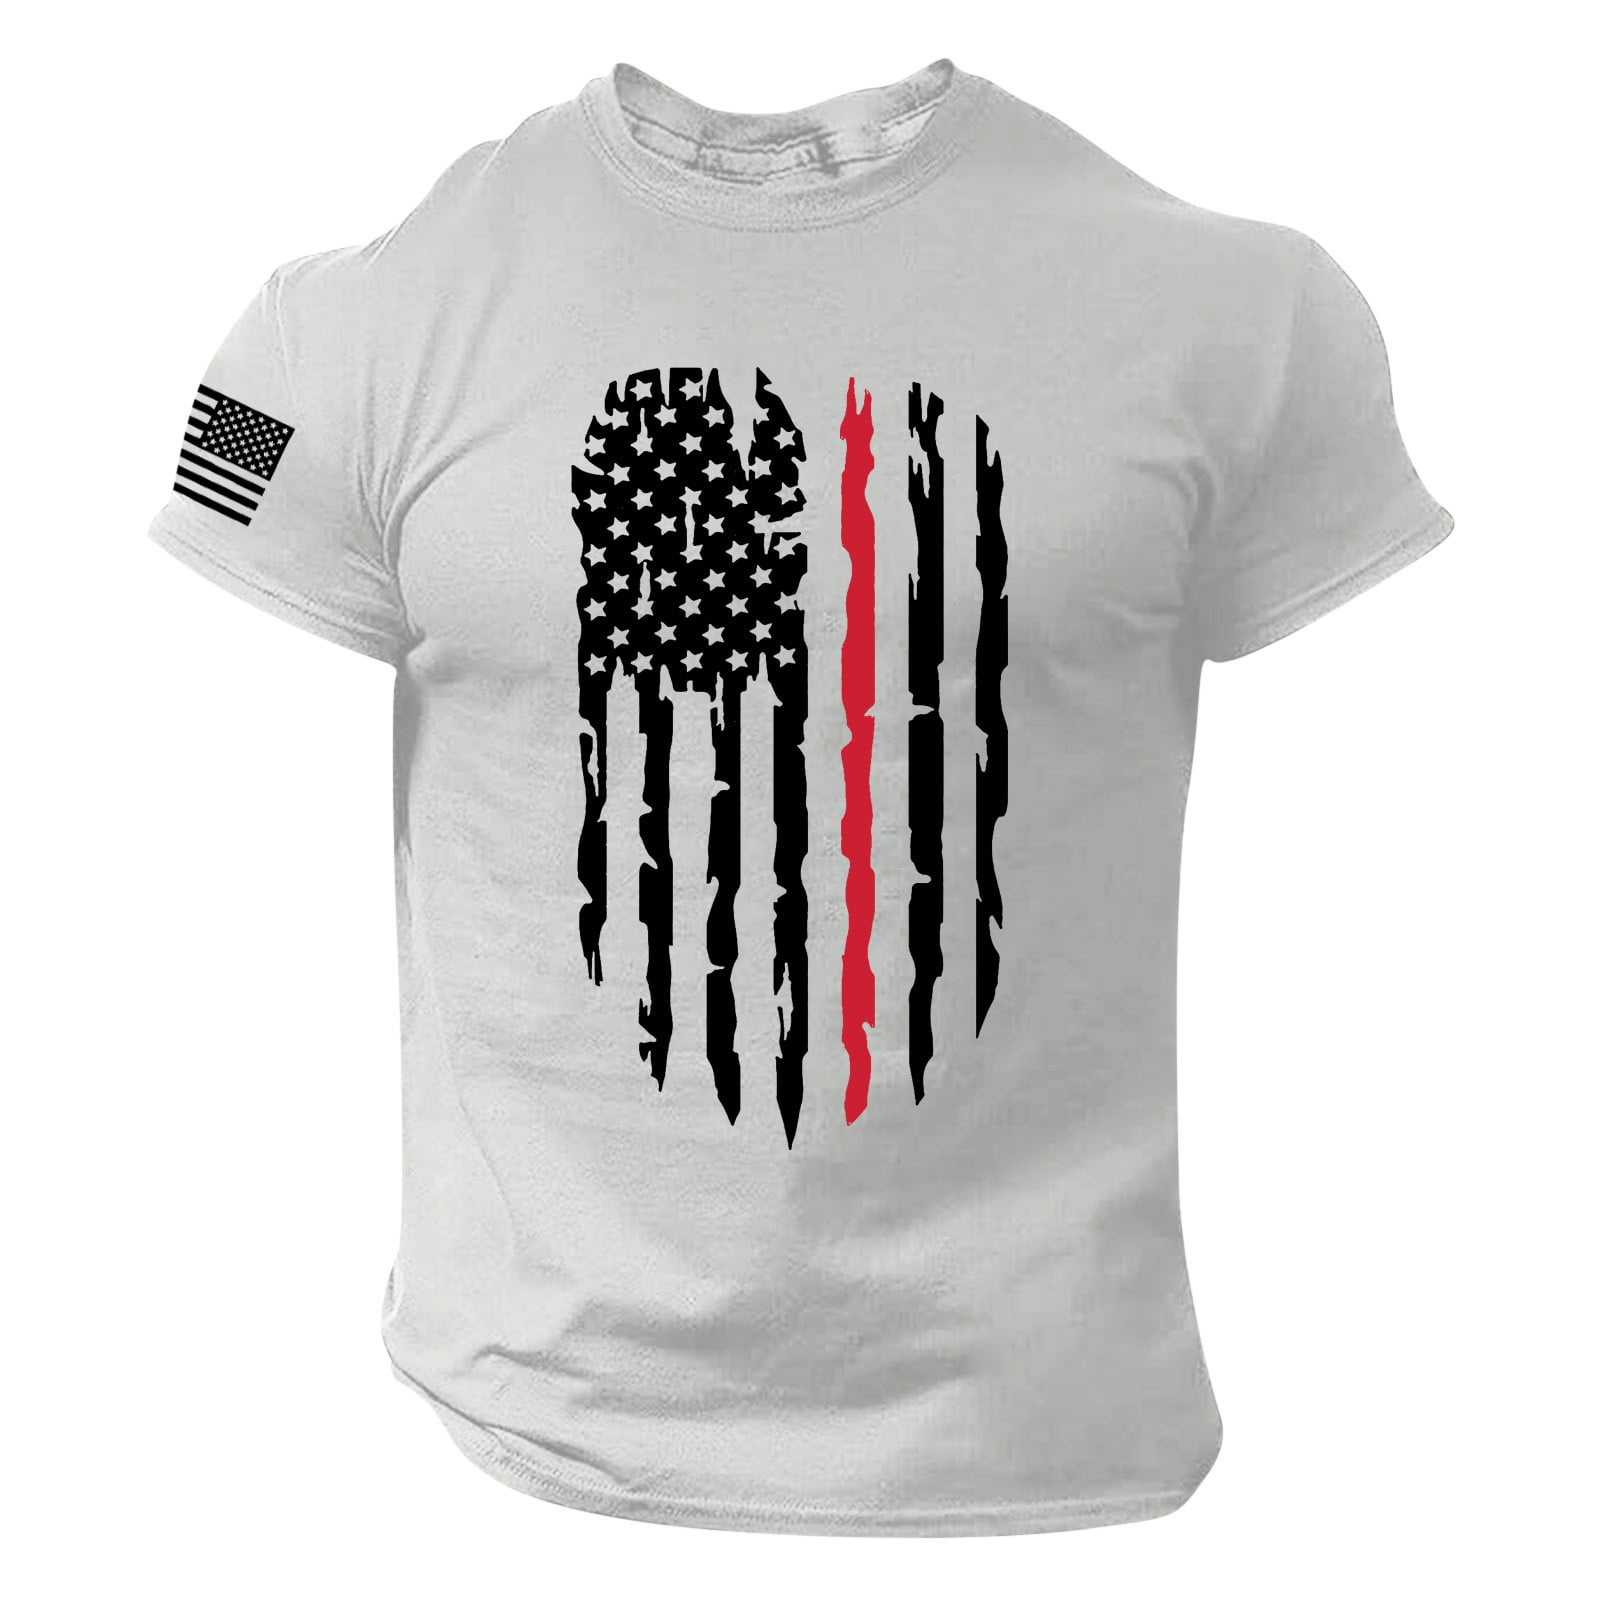 Mens 4th of July Shirt, Mens T-Shirts, USA Flag T- Shirts Short Sleeve American Vintage T shirts Shirts For Men(Grey,L) - Walmart.com